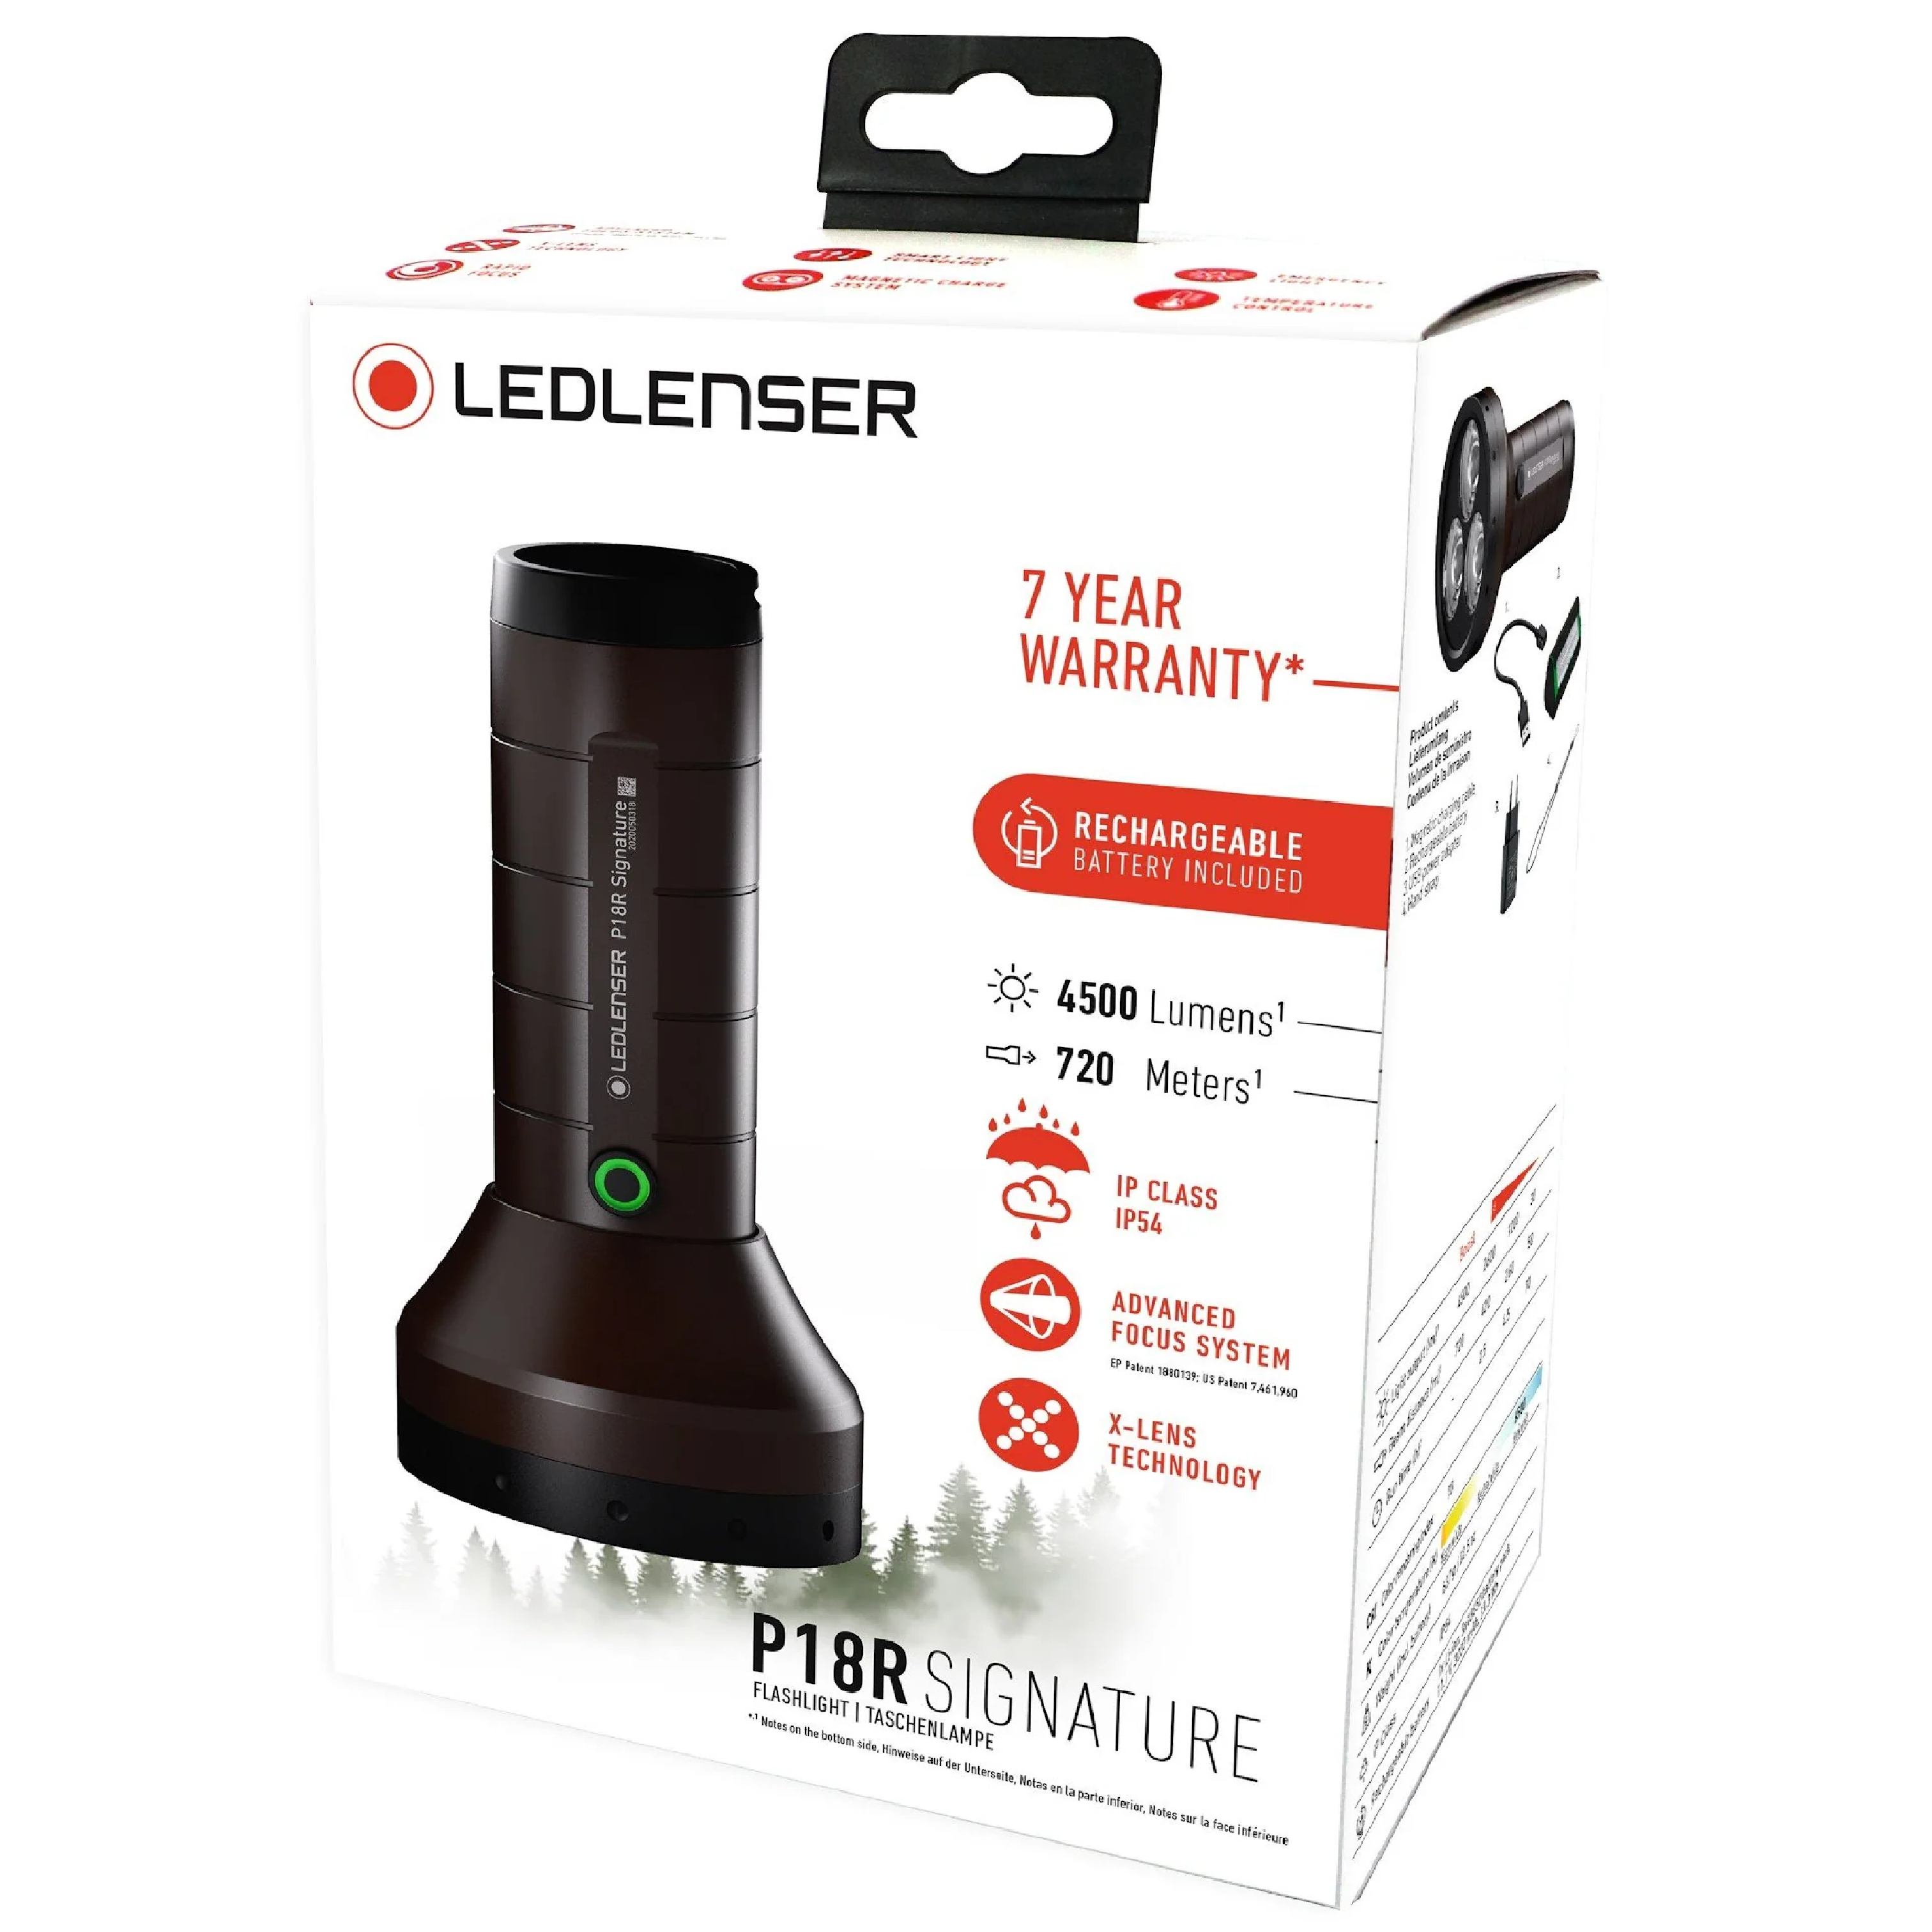 LEDLENSER P18R Signature Flashlight 4500 LUMENS Rechargeable